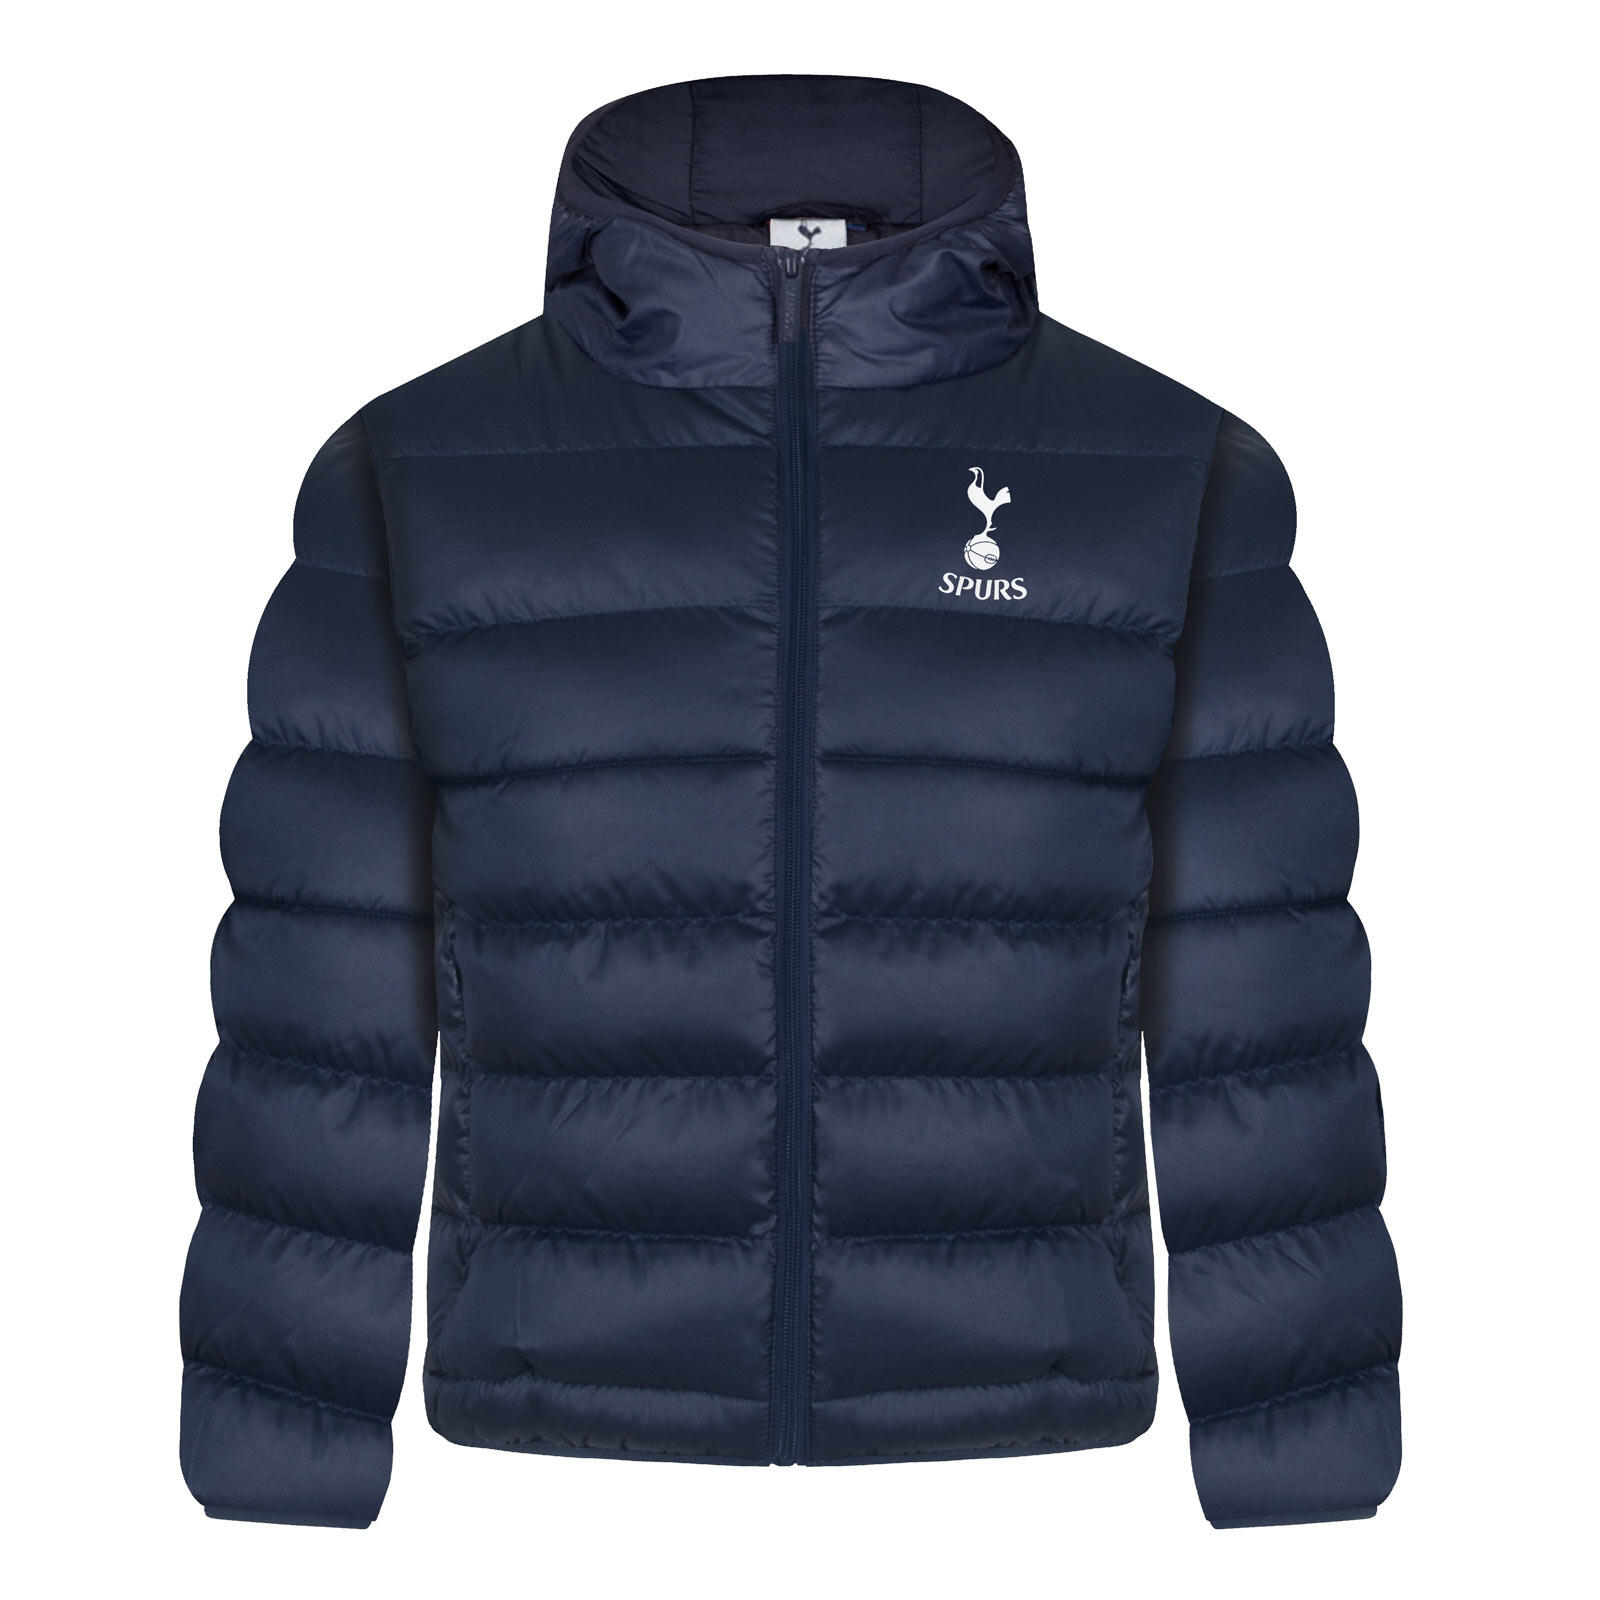 TOTTENHAM HOTSPUR Tottenham Hotspur Boys Jacket Hooded Winter Quilted Kids OFFICIAL Football Gift